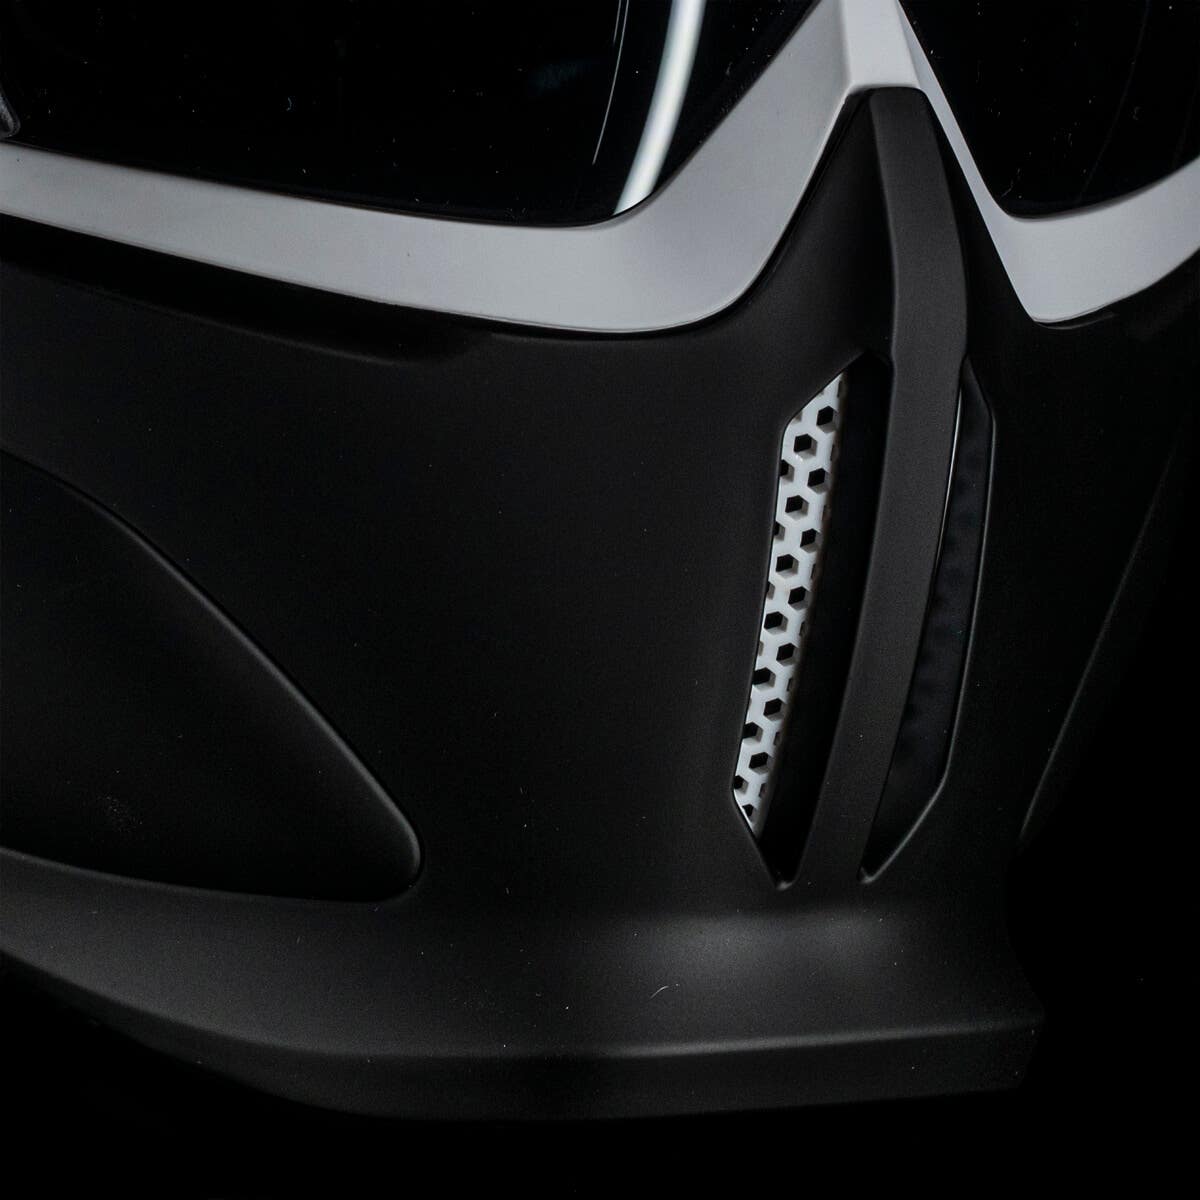 RG1-DX Helmet - Eclipse 19/20